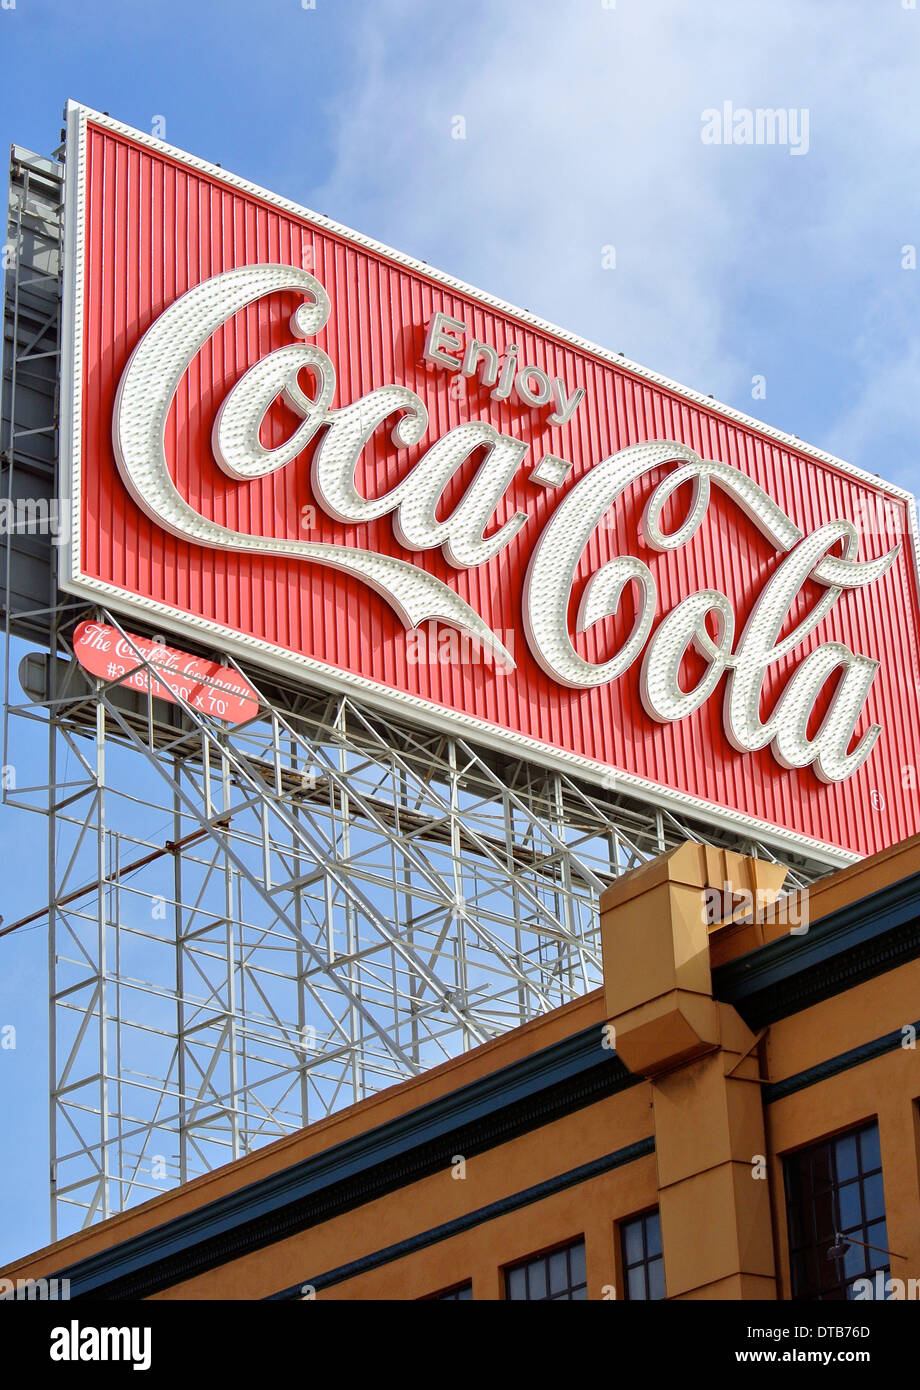 coca cola billboard on building in san francisco Stock Photo